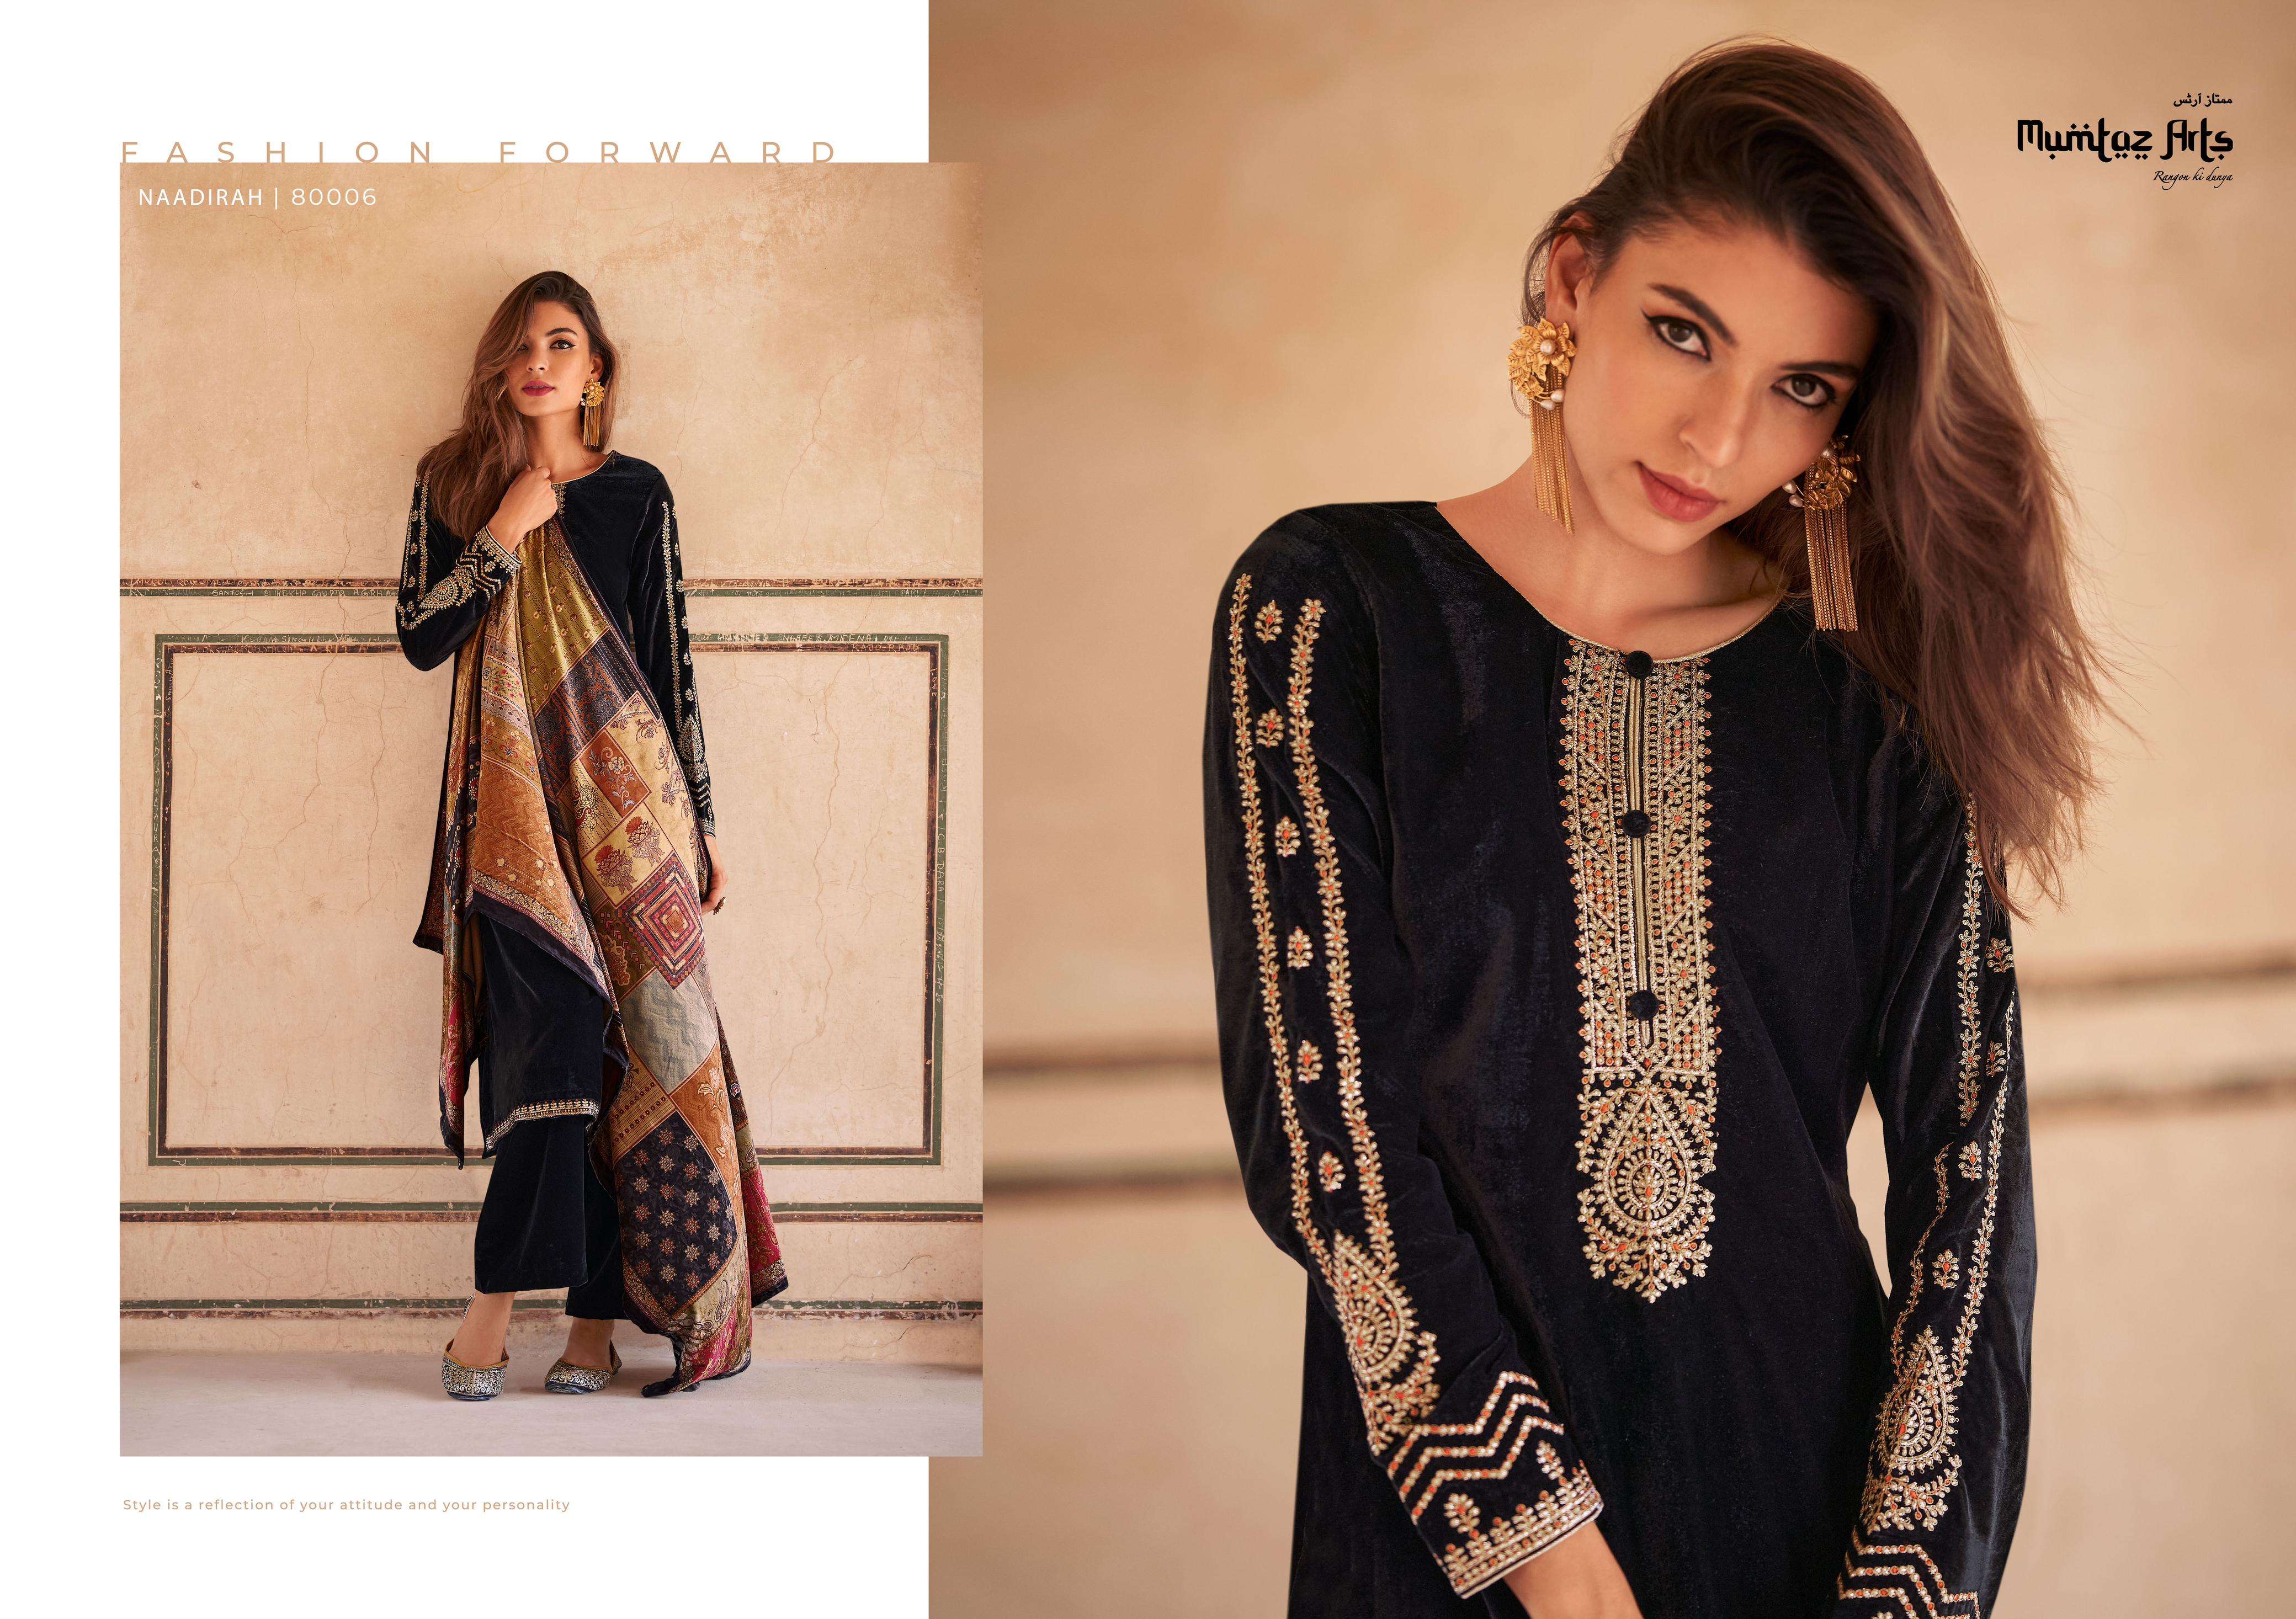 mumtaz art naadirah velvet regal look salwar suit catalog